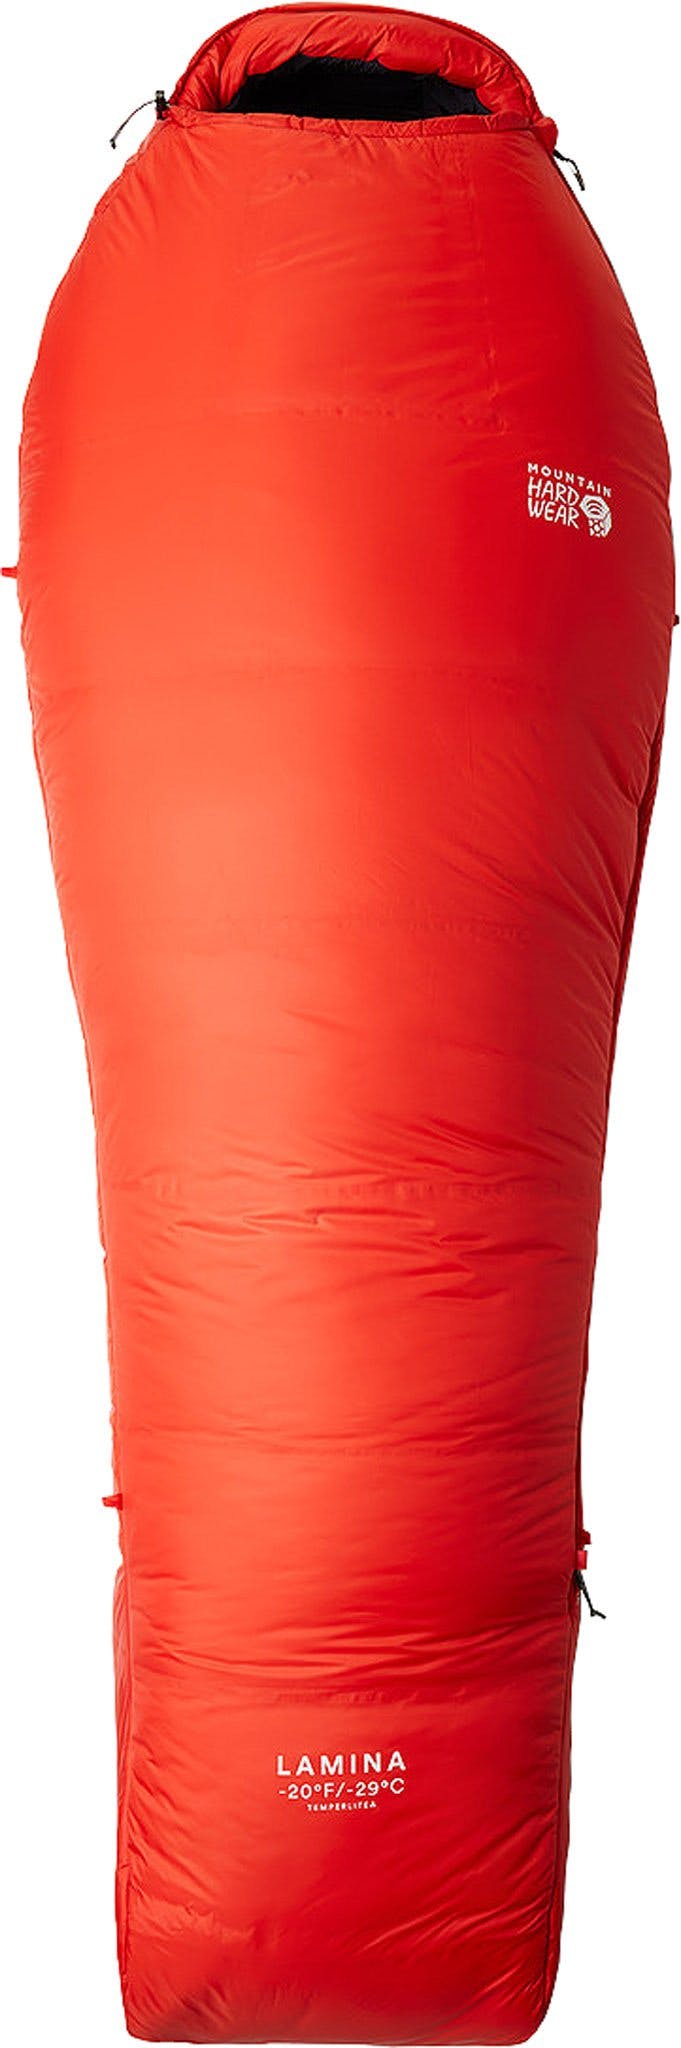 Product image for Lamina -20F/-29C Long Sleeping Bag